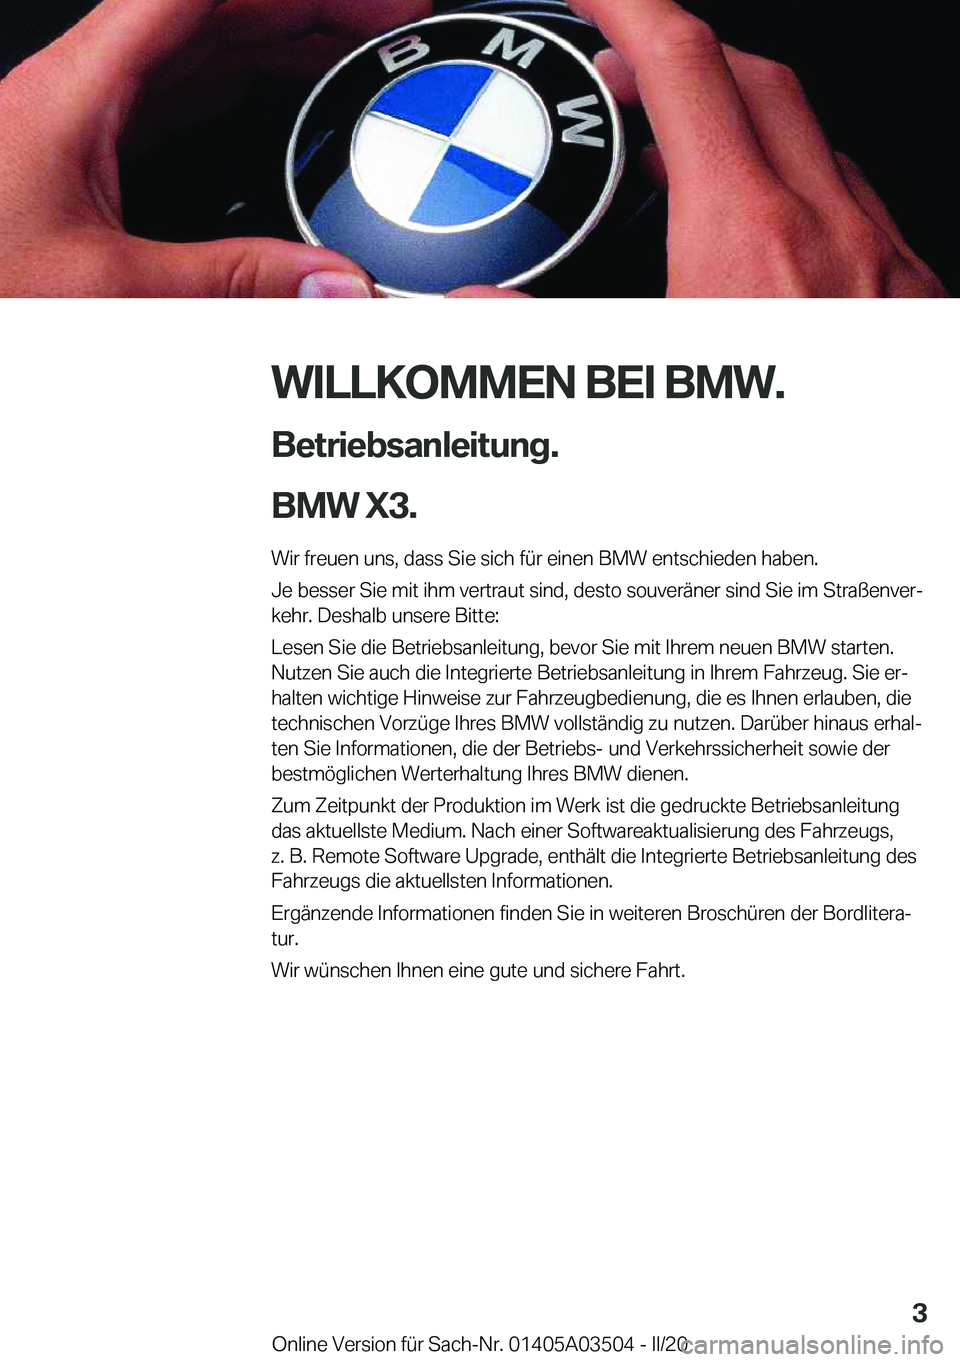 BMW X3 2020  Betriebsanleitungen (in German) �W�I�L�L�K�O�M�M�E�N��B�E�I��B�M�W�.�B�e�t�r�i�e�b�s�a�n�l�e�i�t�u�n�g�.
�B�M�W��X�3�. �W�i�r��f�r�e�u�e�n��u�n�s�,��d�a�s�s��S�i�e��s�i�c�h��f�